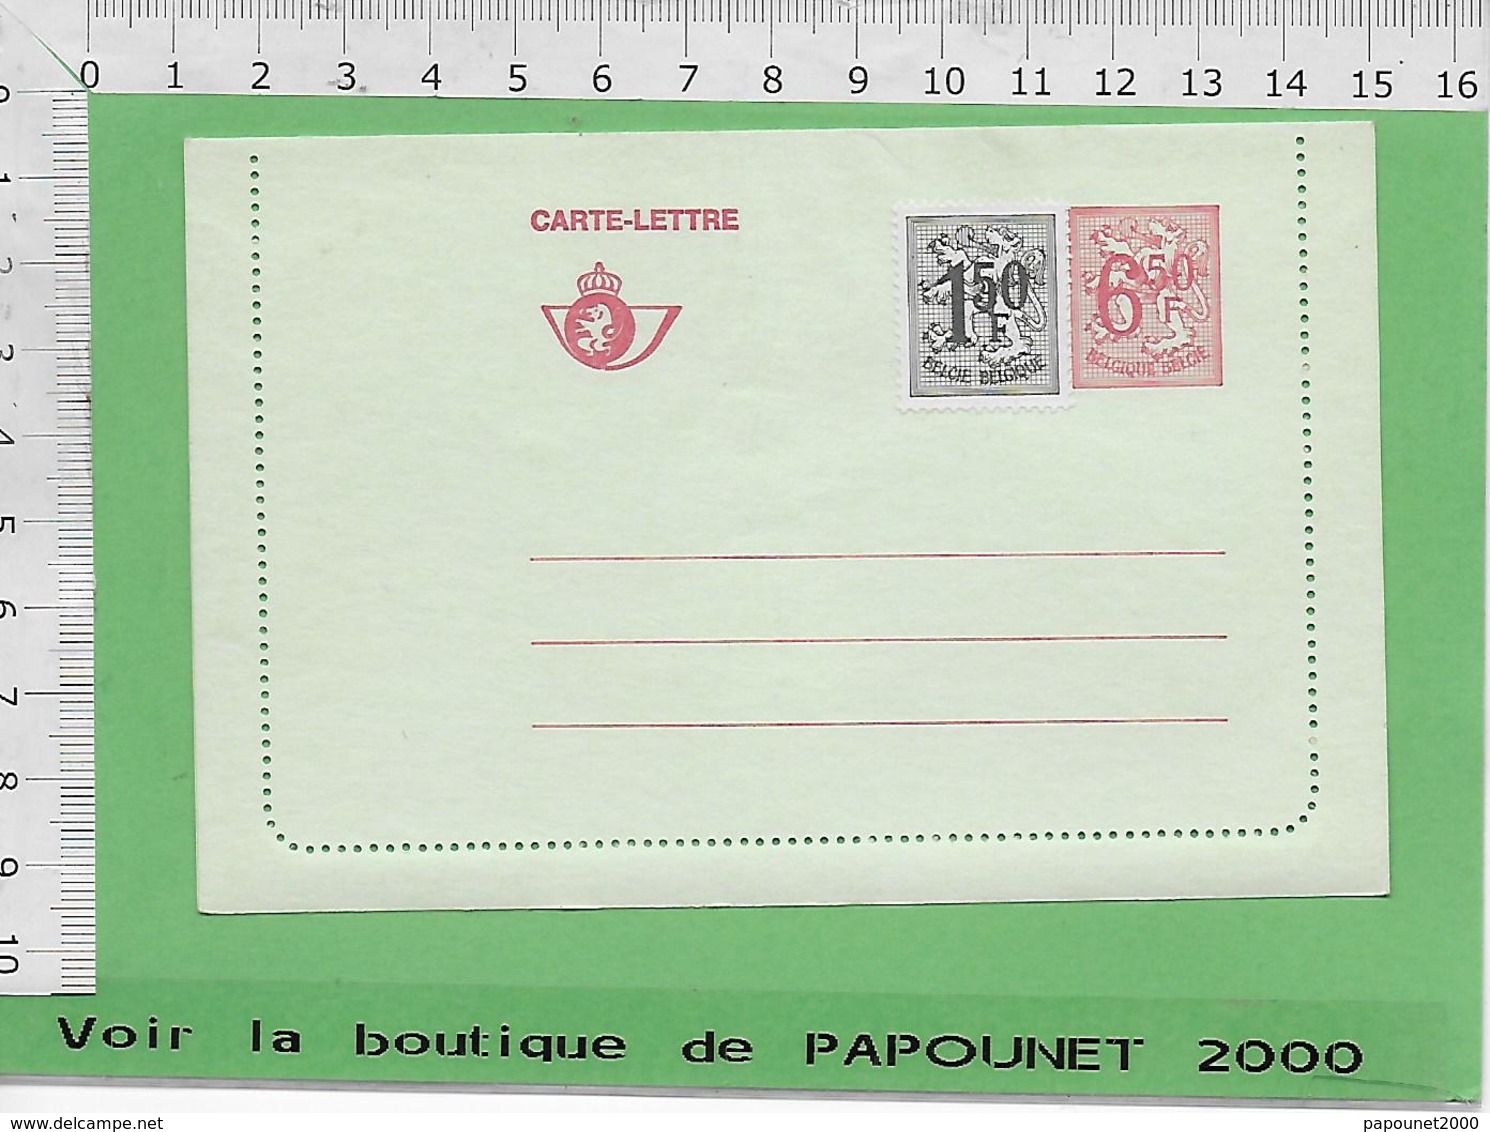 01538 - 03020 - E Be Entiers Postaux  Enveloppe-lettre - Briefumschläge